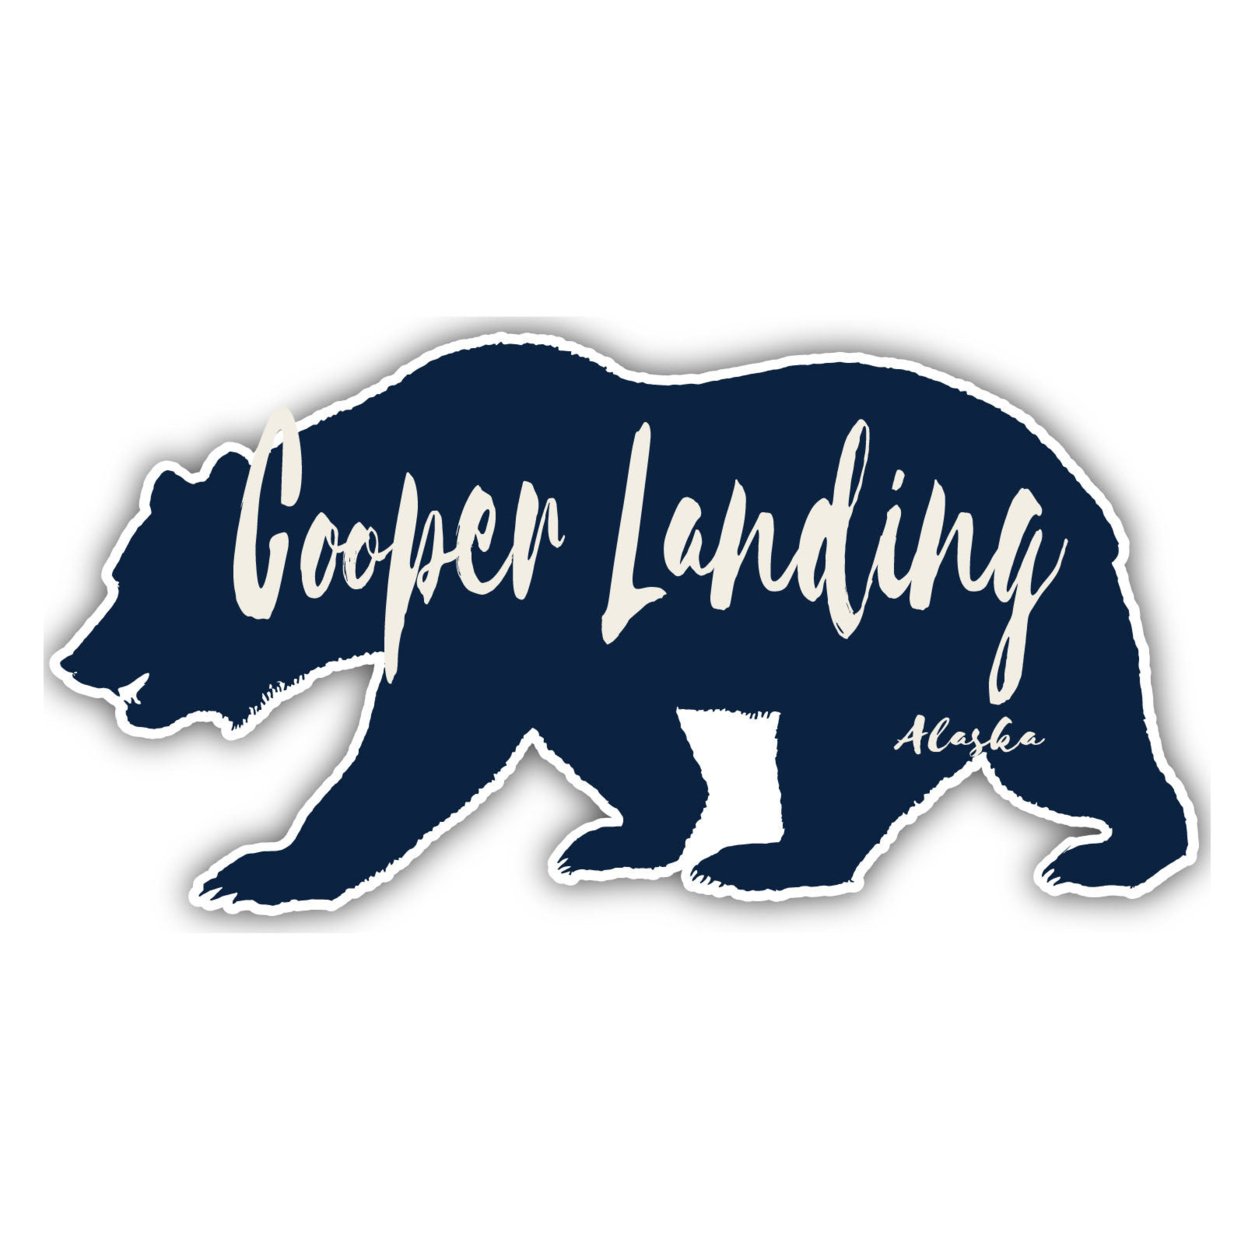 Cooper Landing Alaska Souvenir Decorative Stickers (Choose Theme And Size) - 4-Pack, 10-Inch, Tent